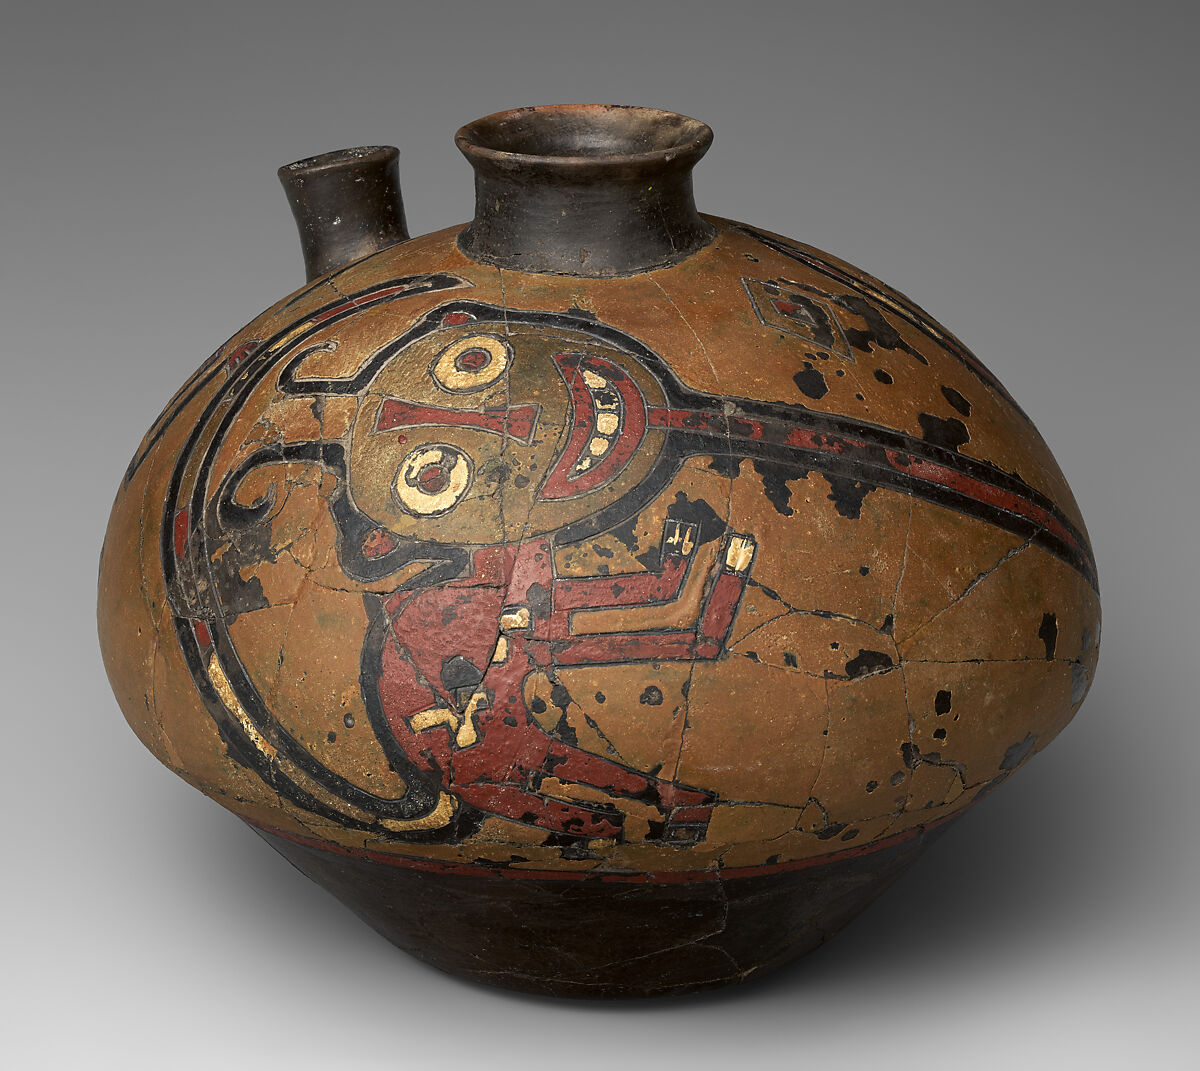 Jar with flying figure (Oculate Being), Paracas artist(s), Ceramic, post-fire paint, Paracas 